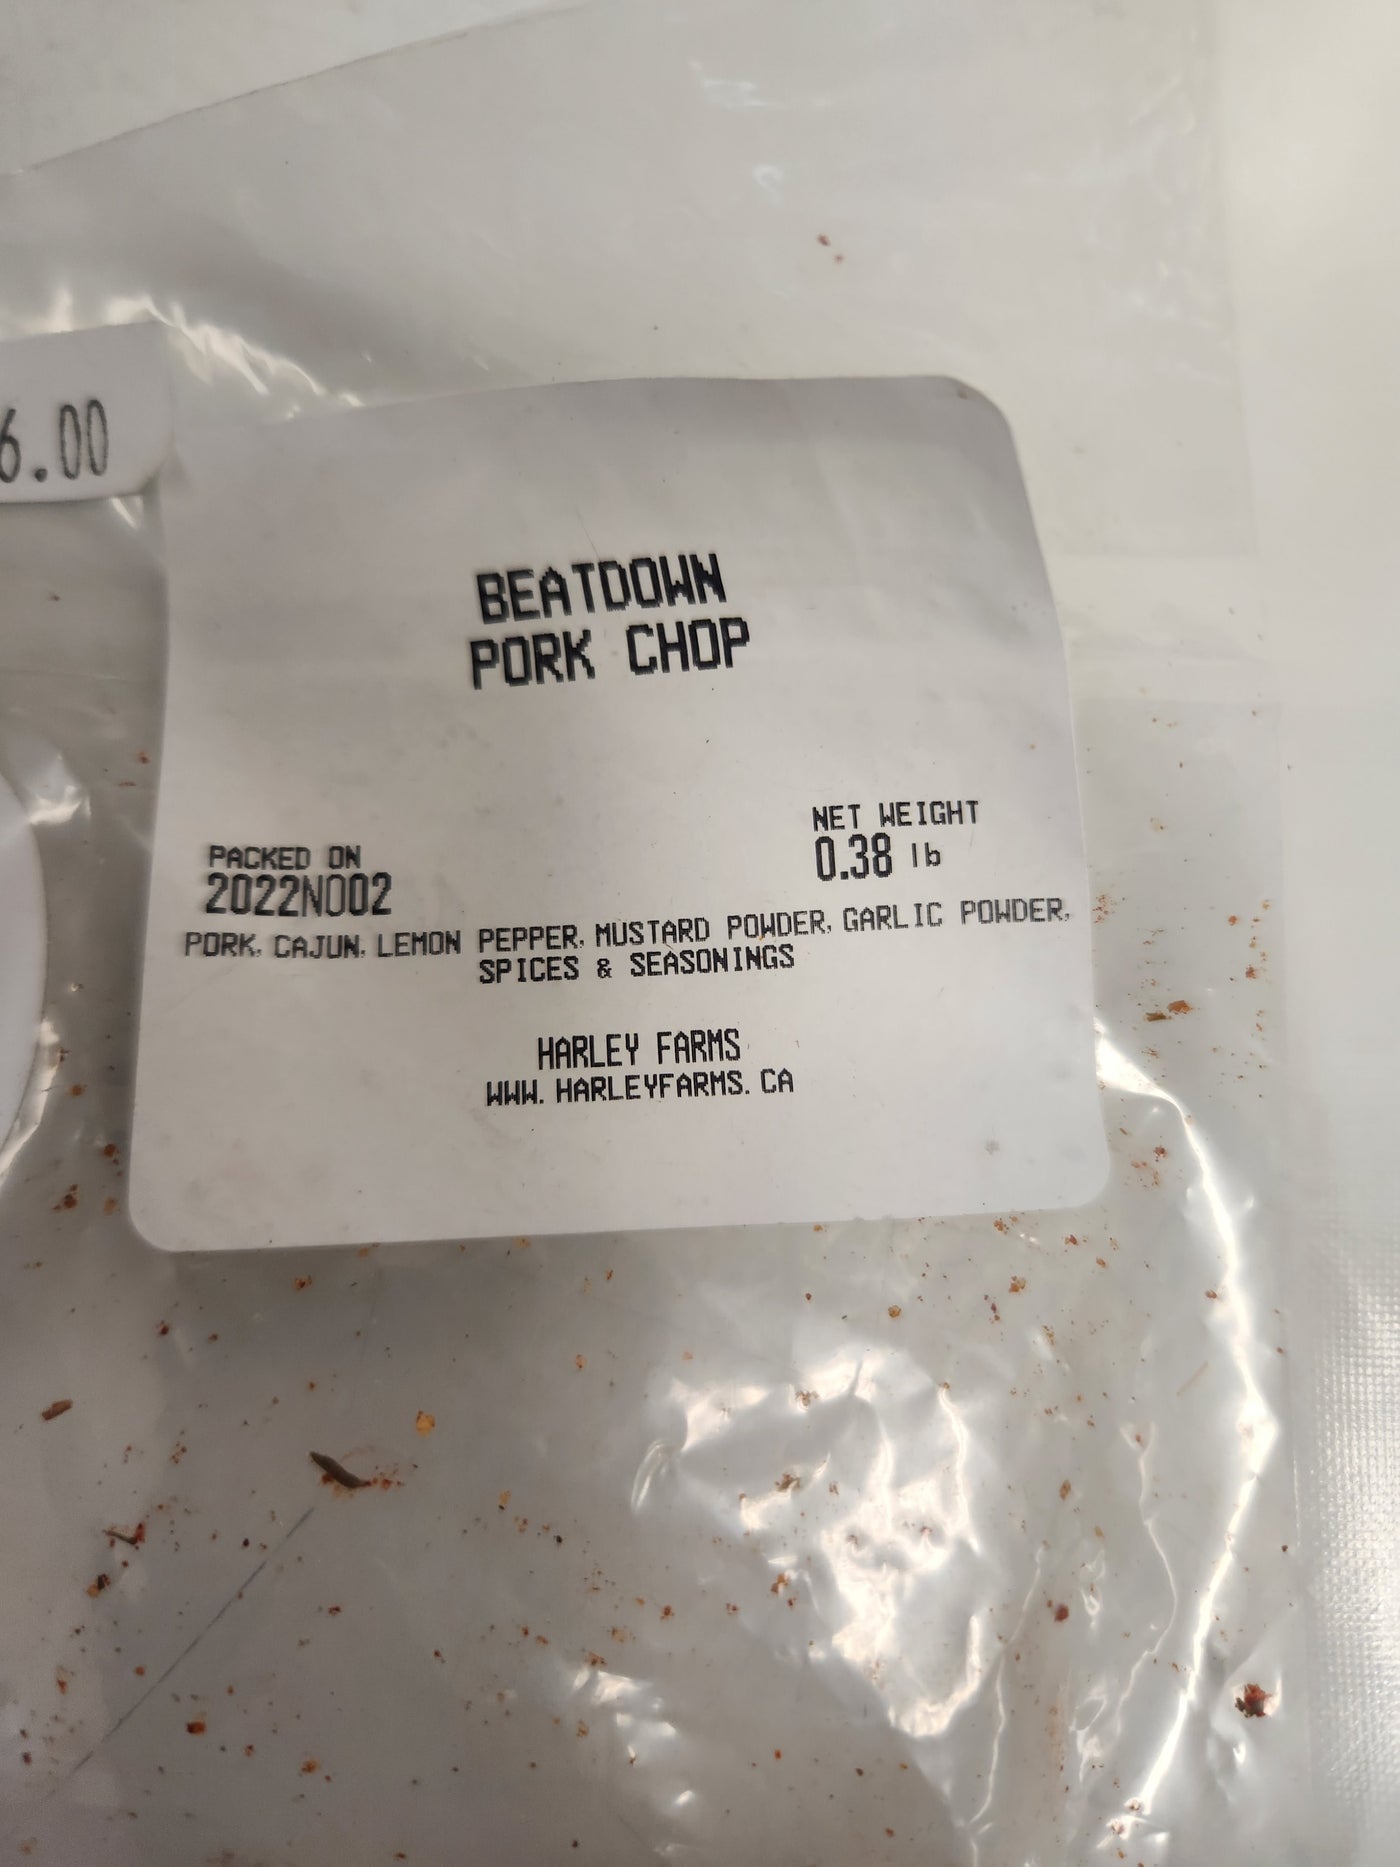 Beatdown pork chop